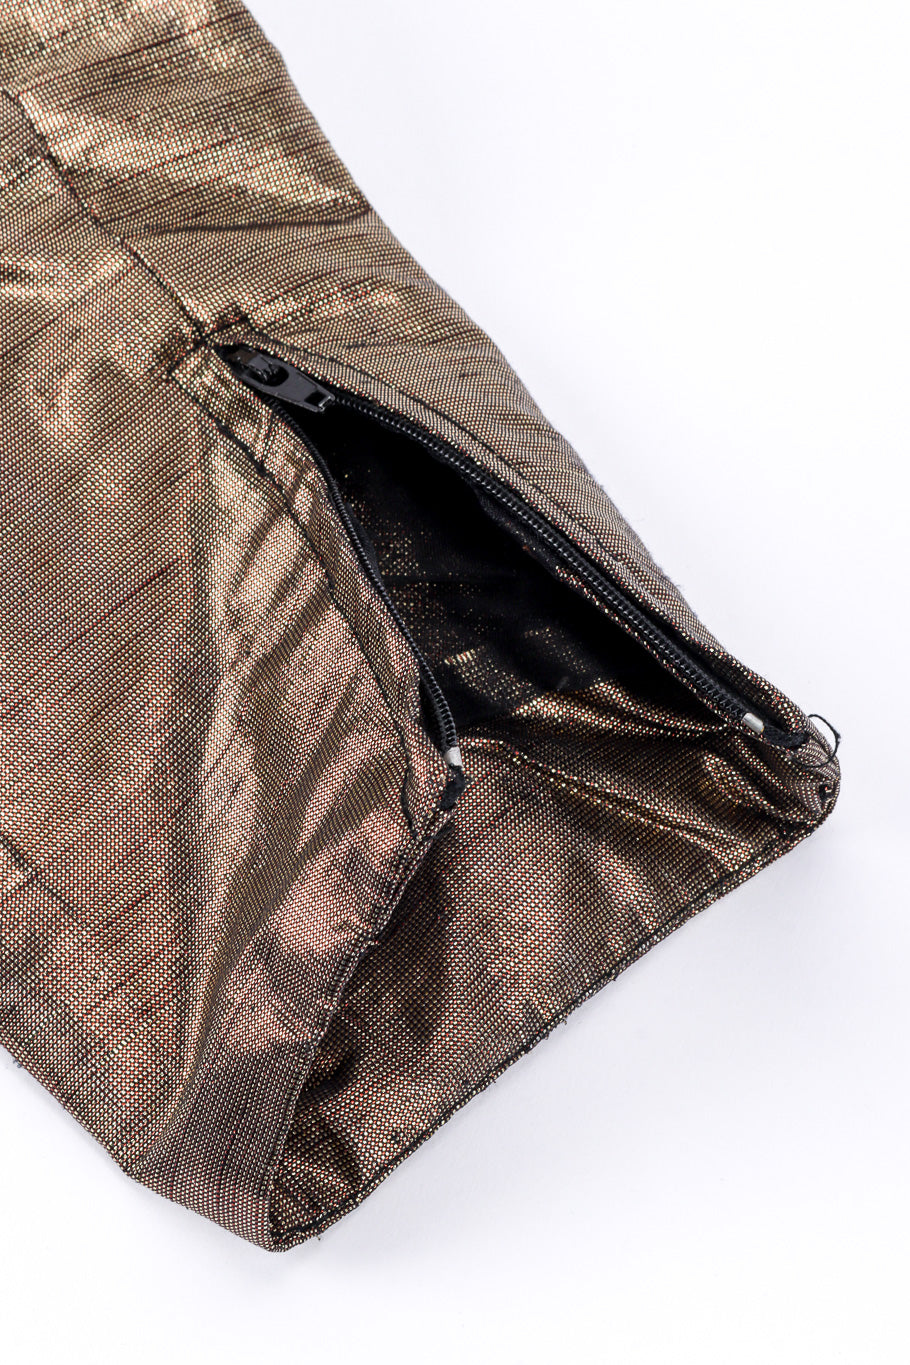 Vintage Victor Costa Paisley Puff Sleeve Jacket zipper sleeve closeup @recessla